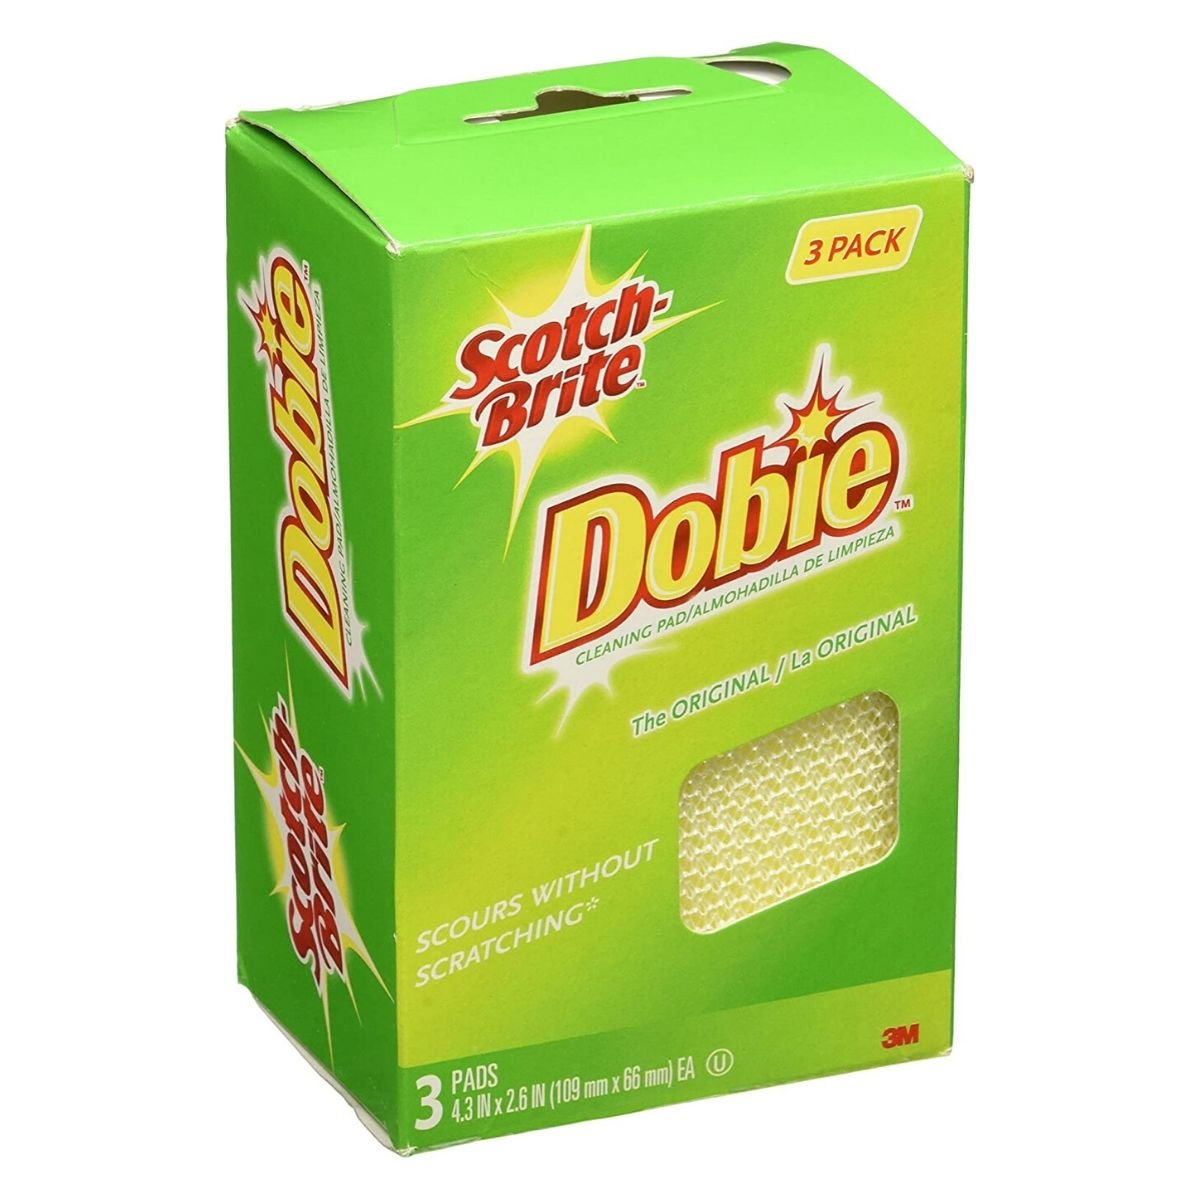 The Best Dish Sponge Options: Scotch-Brite 3PK Dobie Cleaning Pad